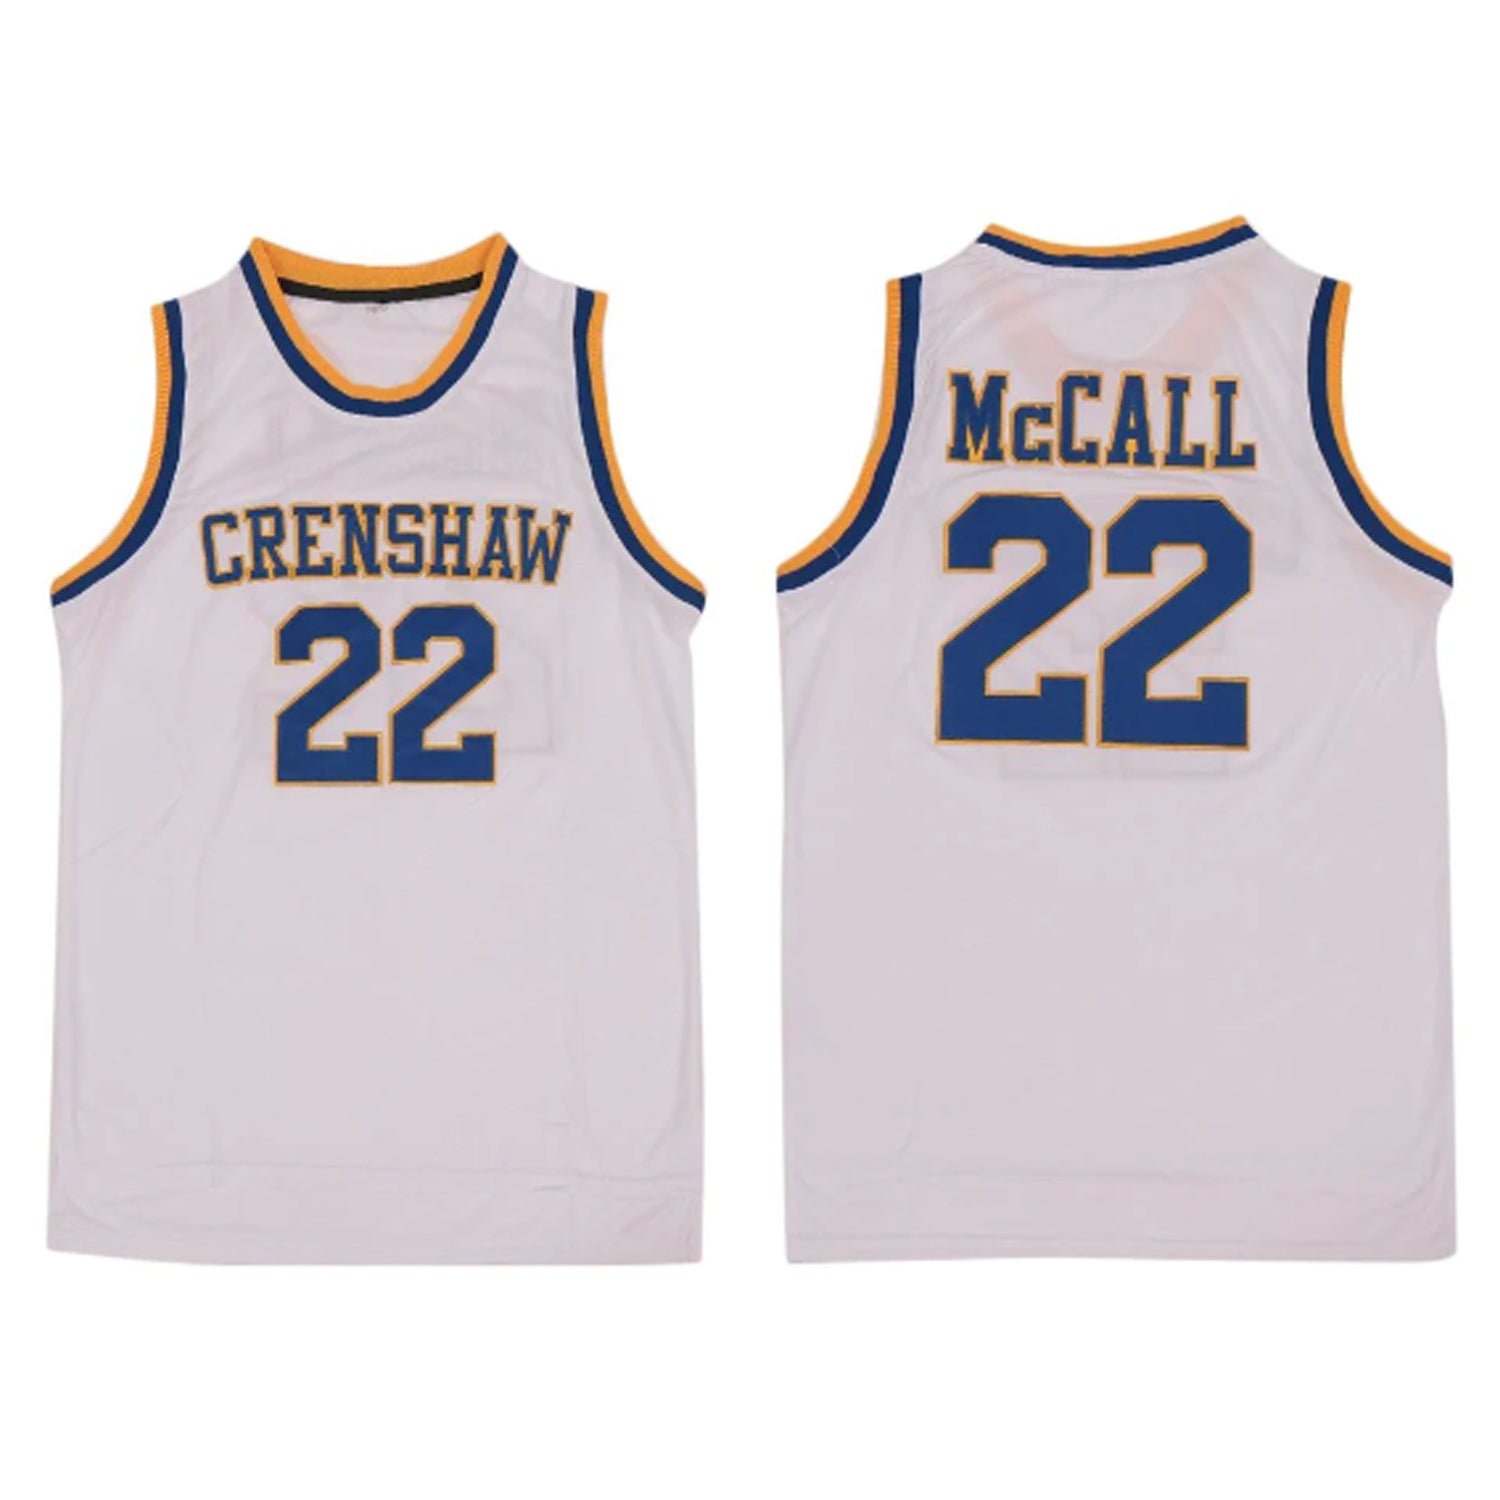 Quincy McCall 22 Crenshaw High School Basketball Jersey Love and Basketball